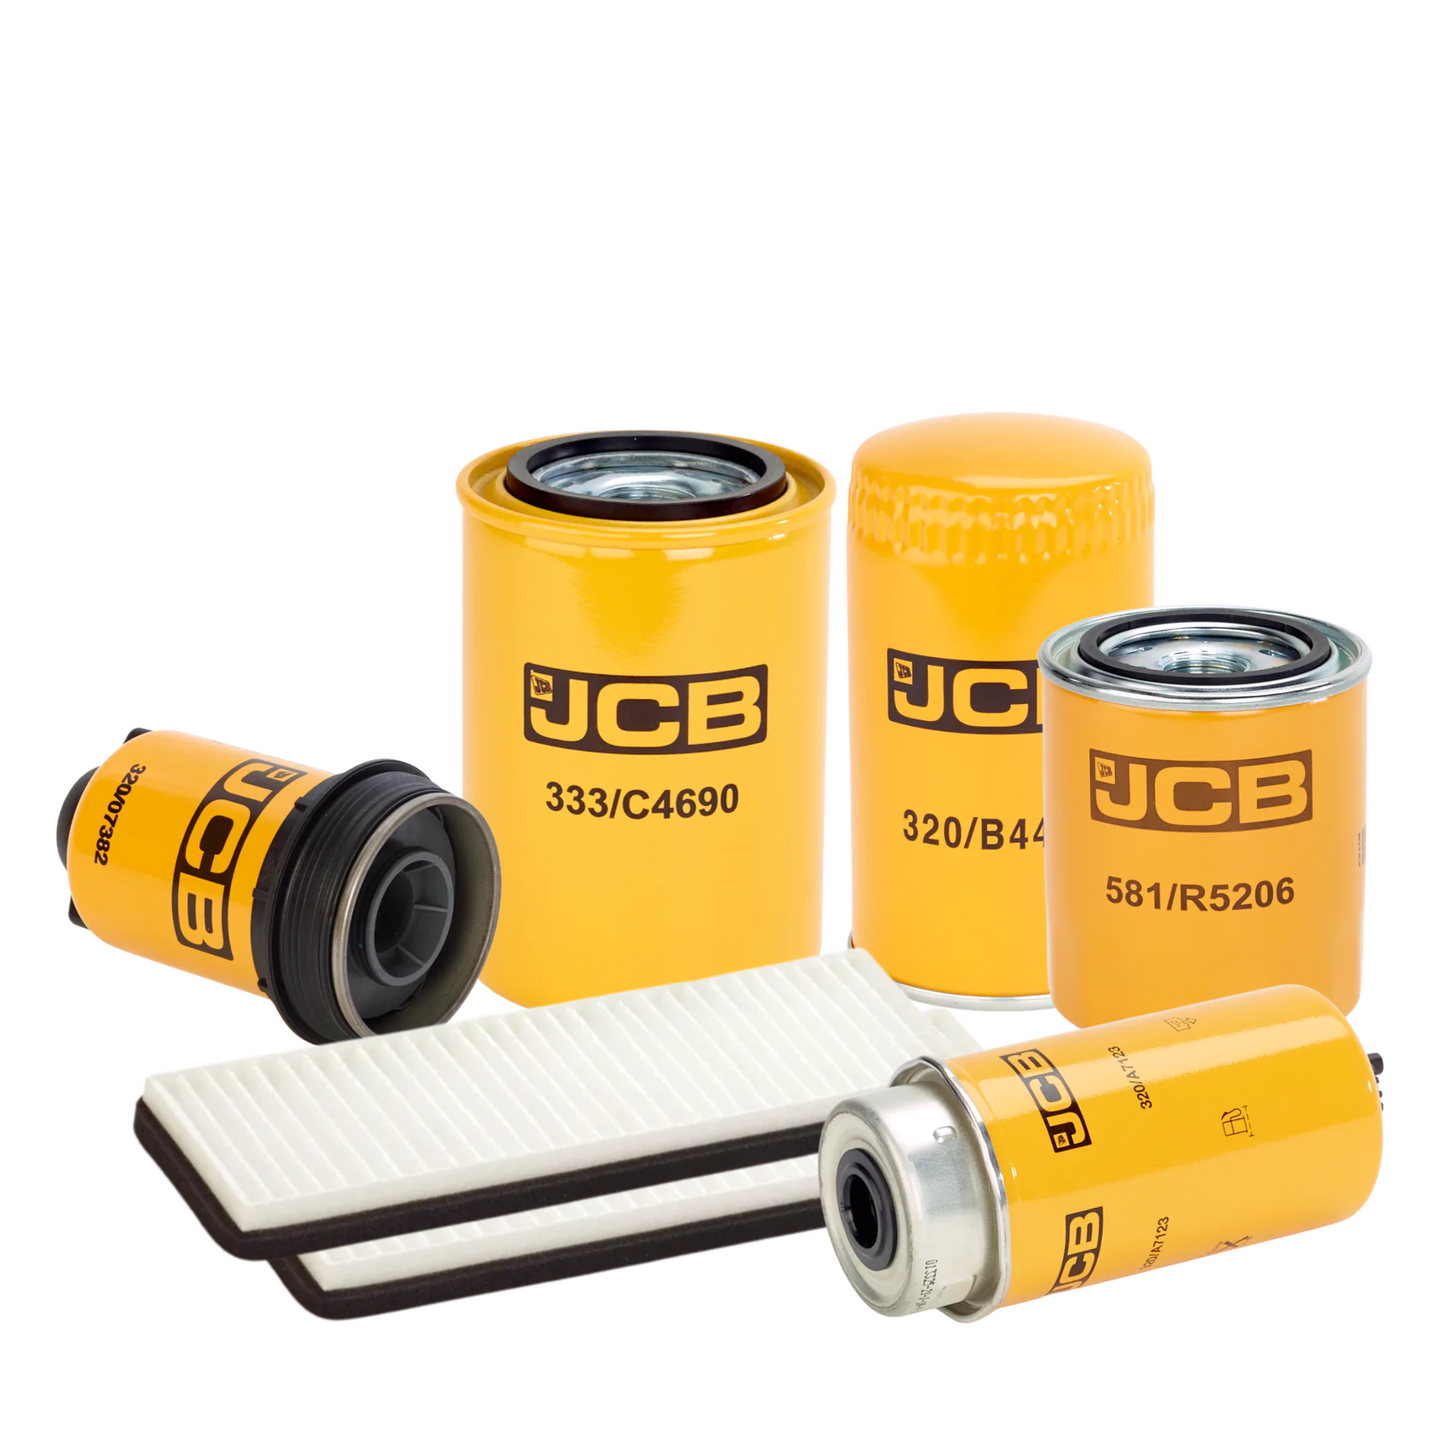 JCB 535-125 5500 Hour Filter Service Kit